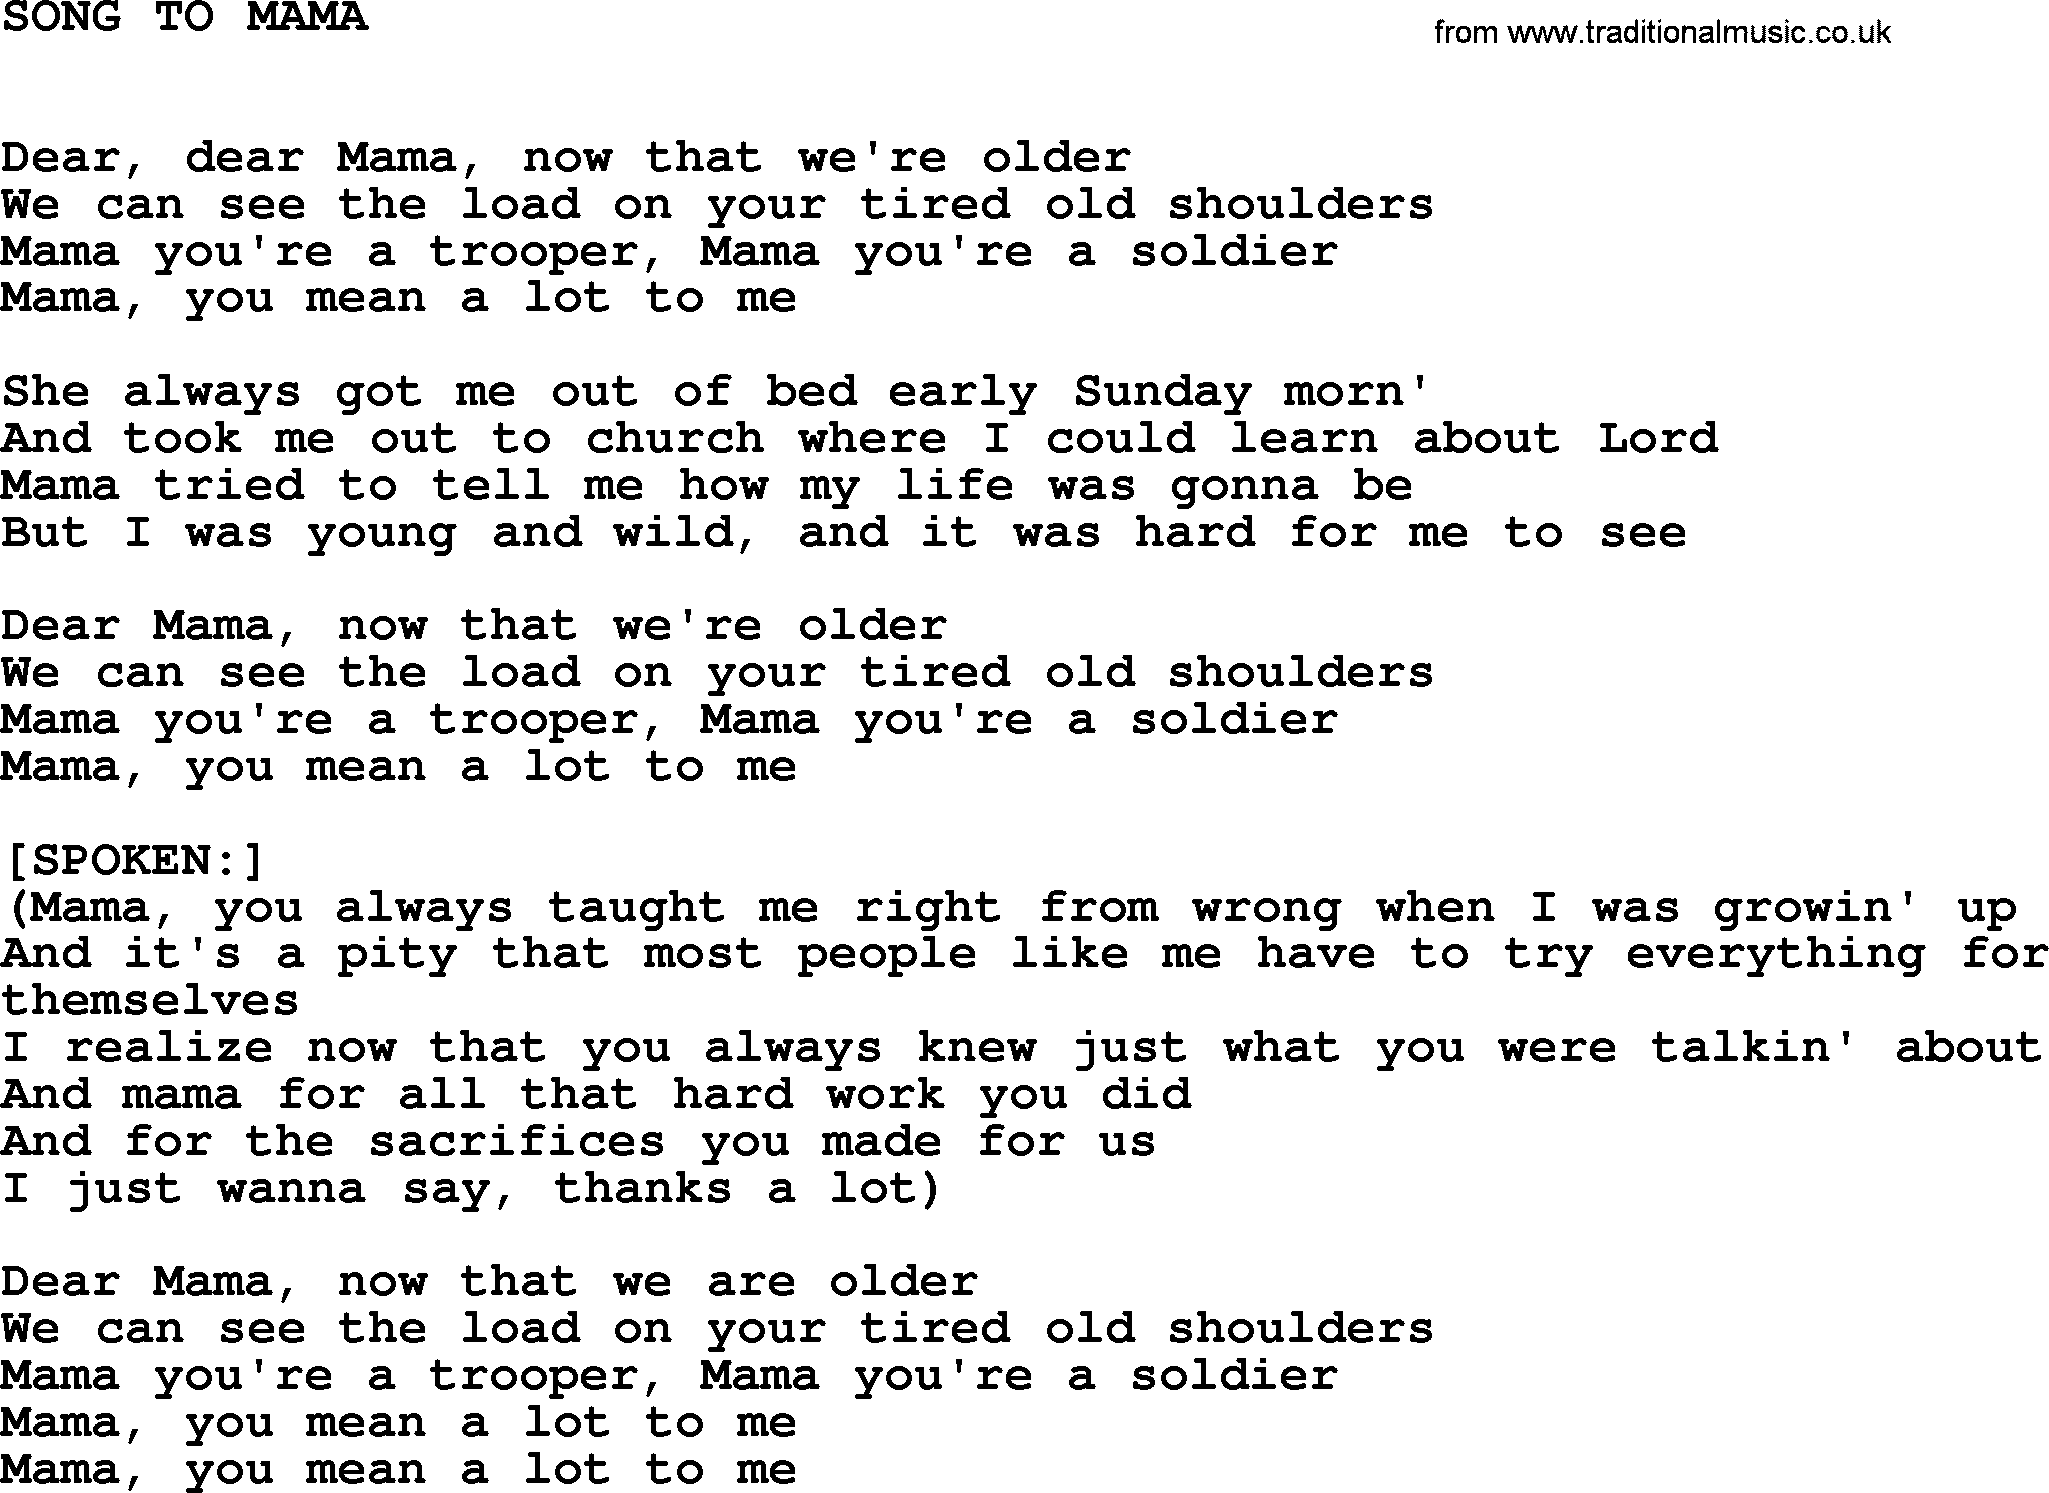 Johnny Cash song Song To Mama.txt lyrics